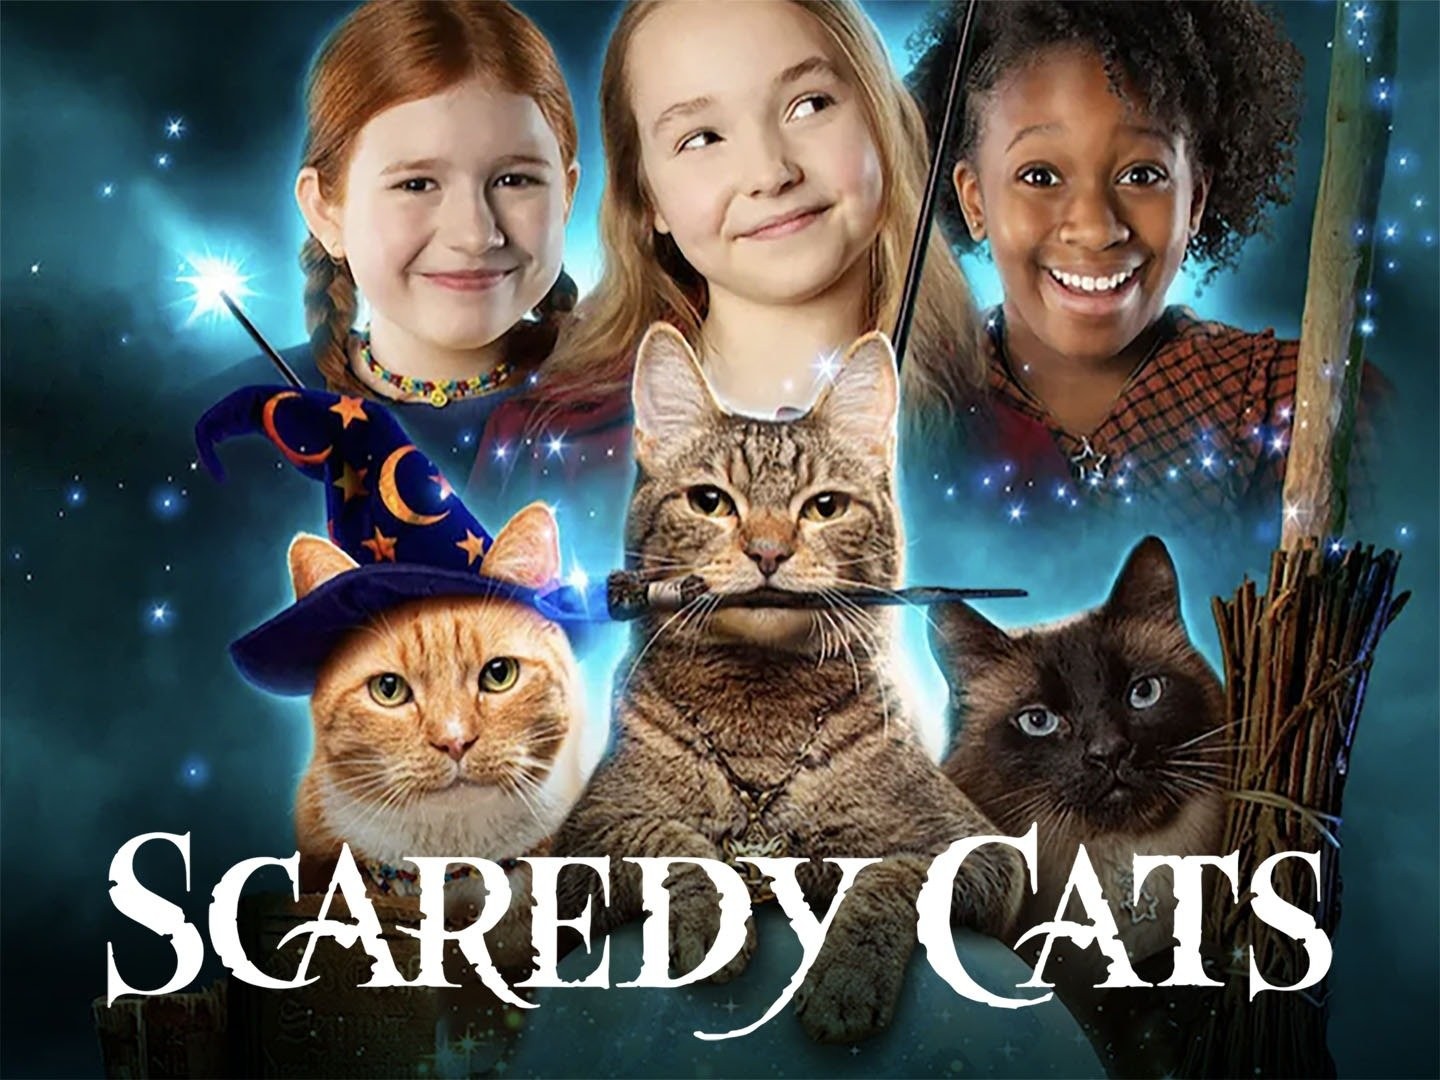 Watch Scaredy Cats season 1 episode 9 streaming online